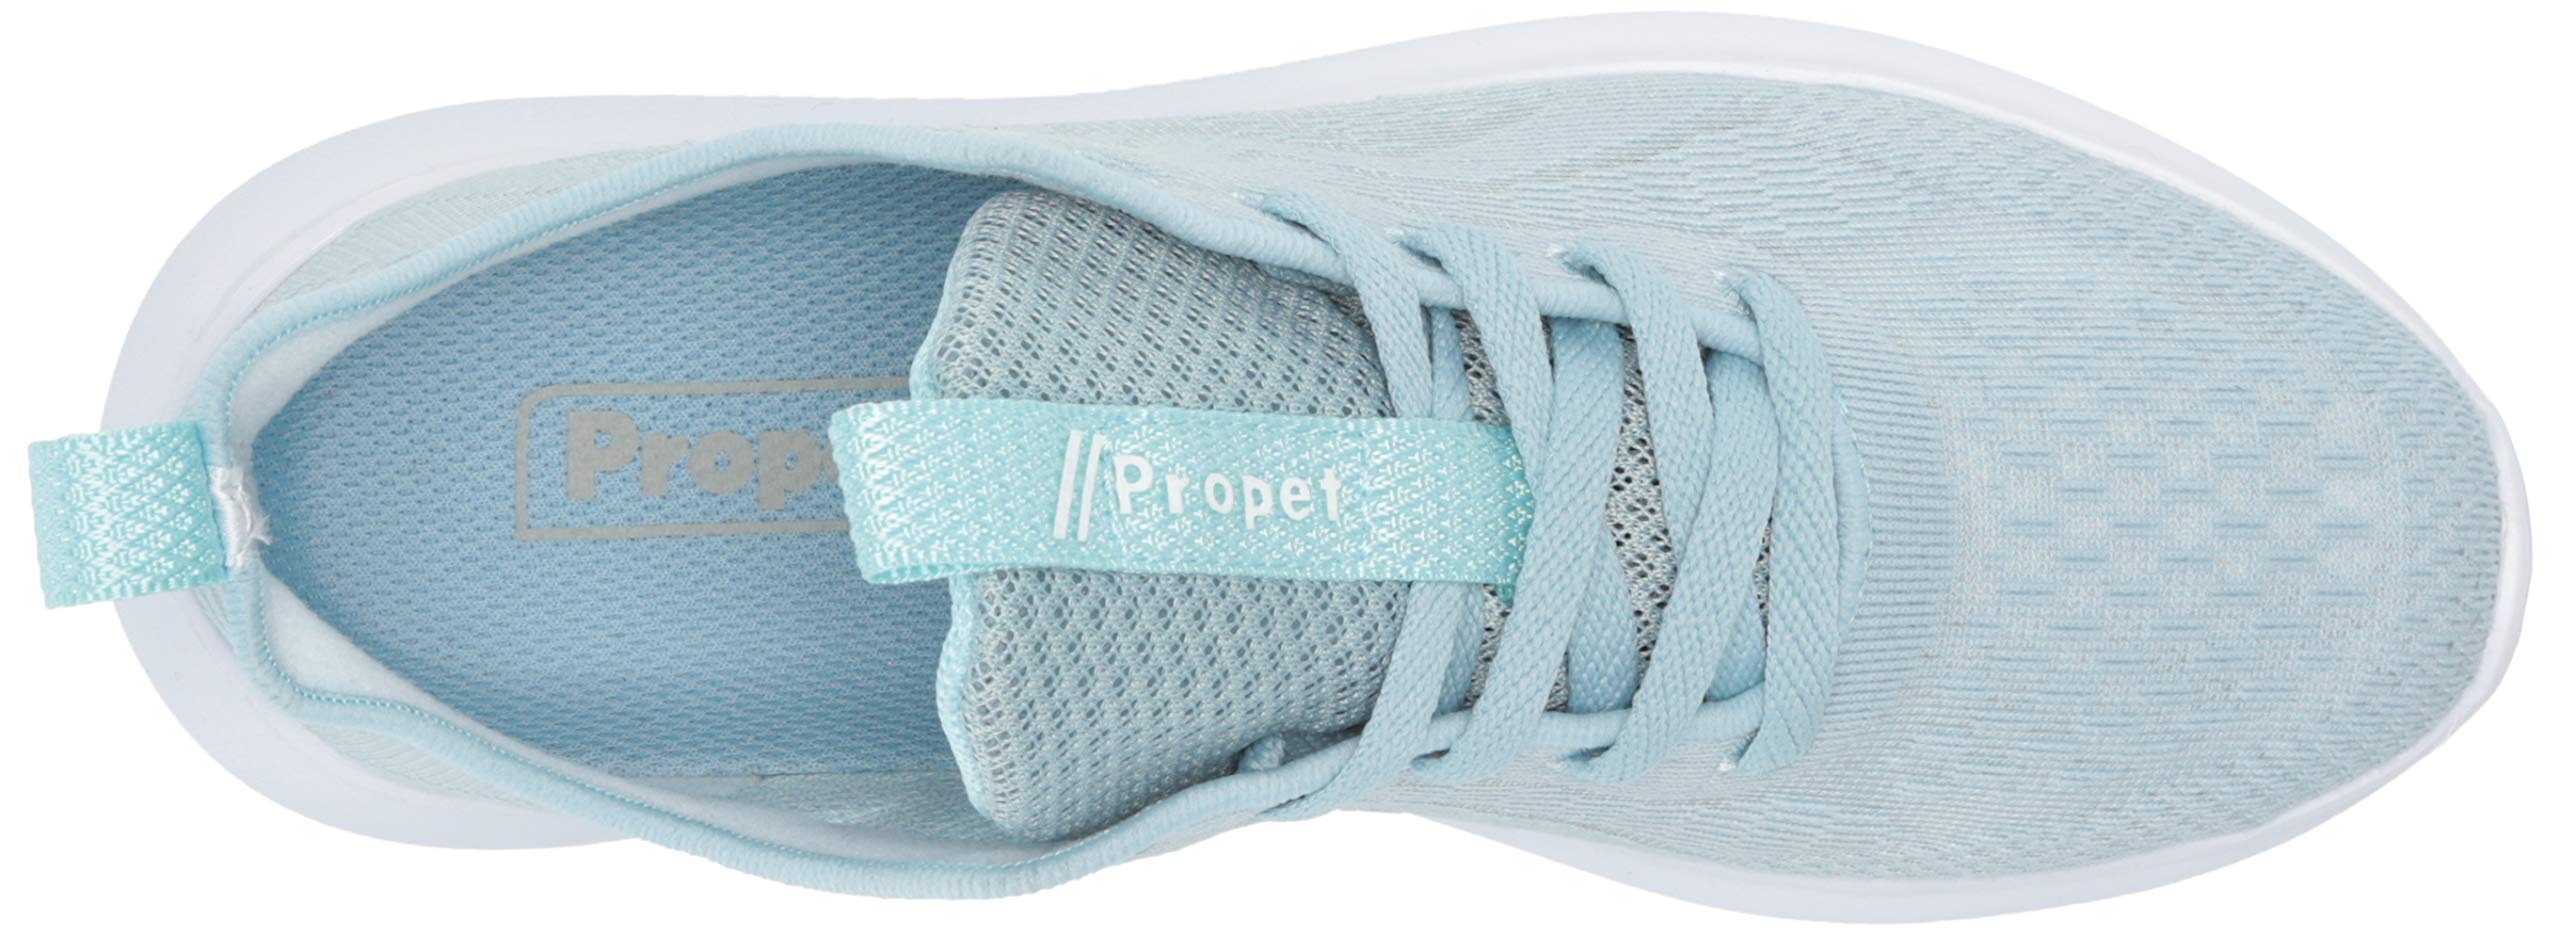 Propét Women's Travelbound Spright Sneaker